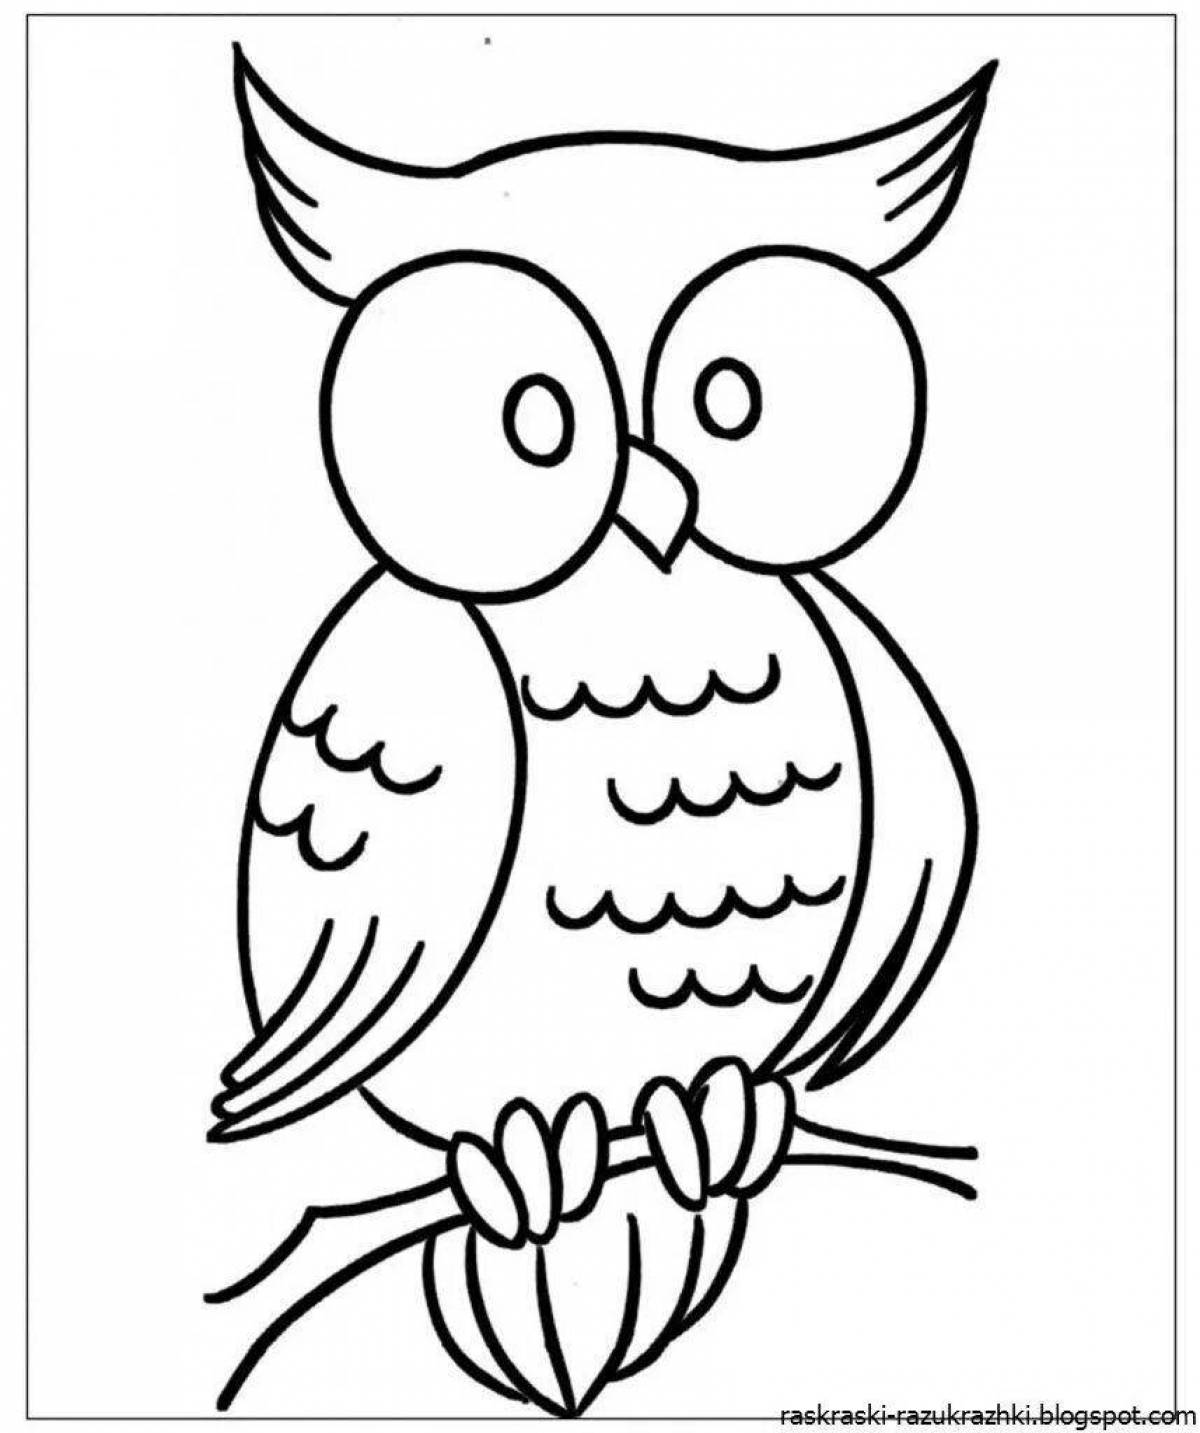 Exquisite owl coloring book